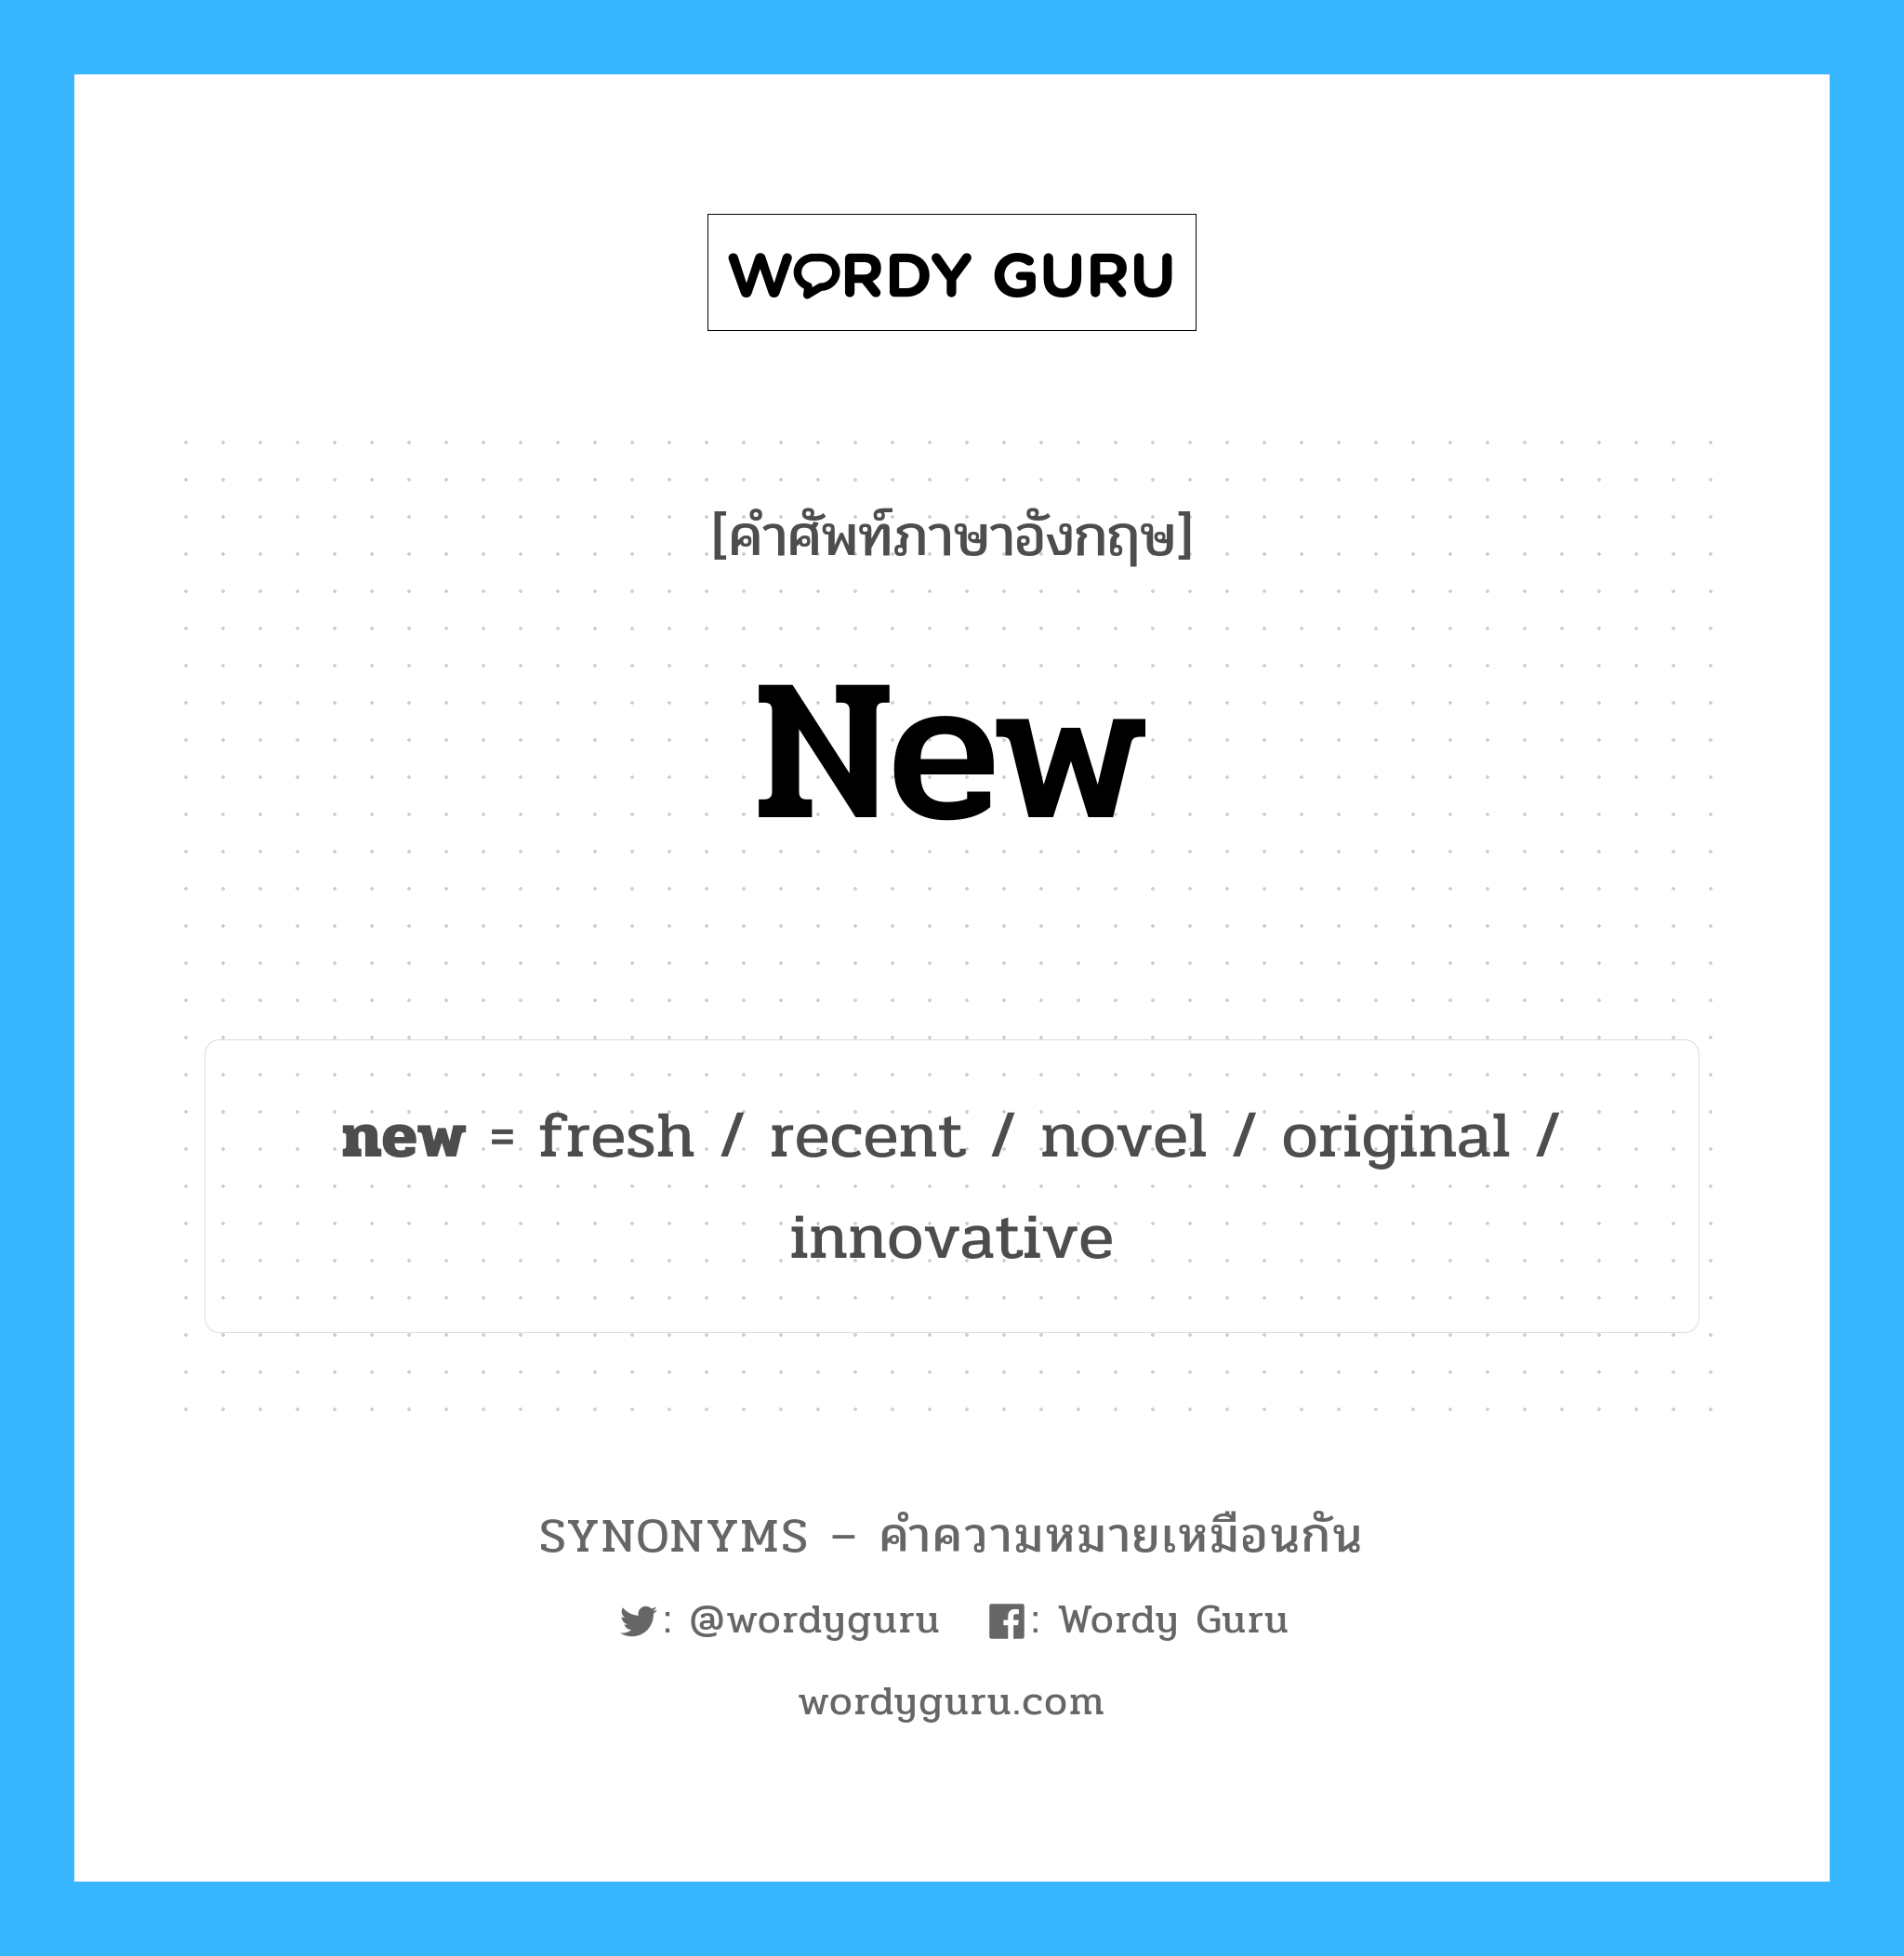 new เป็นหนึ่งใน innovative และมีคำอื่น ๆ อีกดังนี้, คำศัพท์ภาษาอังกฤษ new ความหมายคล้ายกันกับ innovative แปลว่า นวัตกรรม หมวด innovative